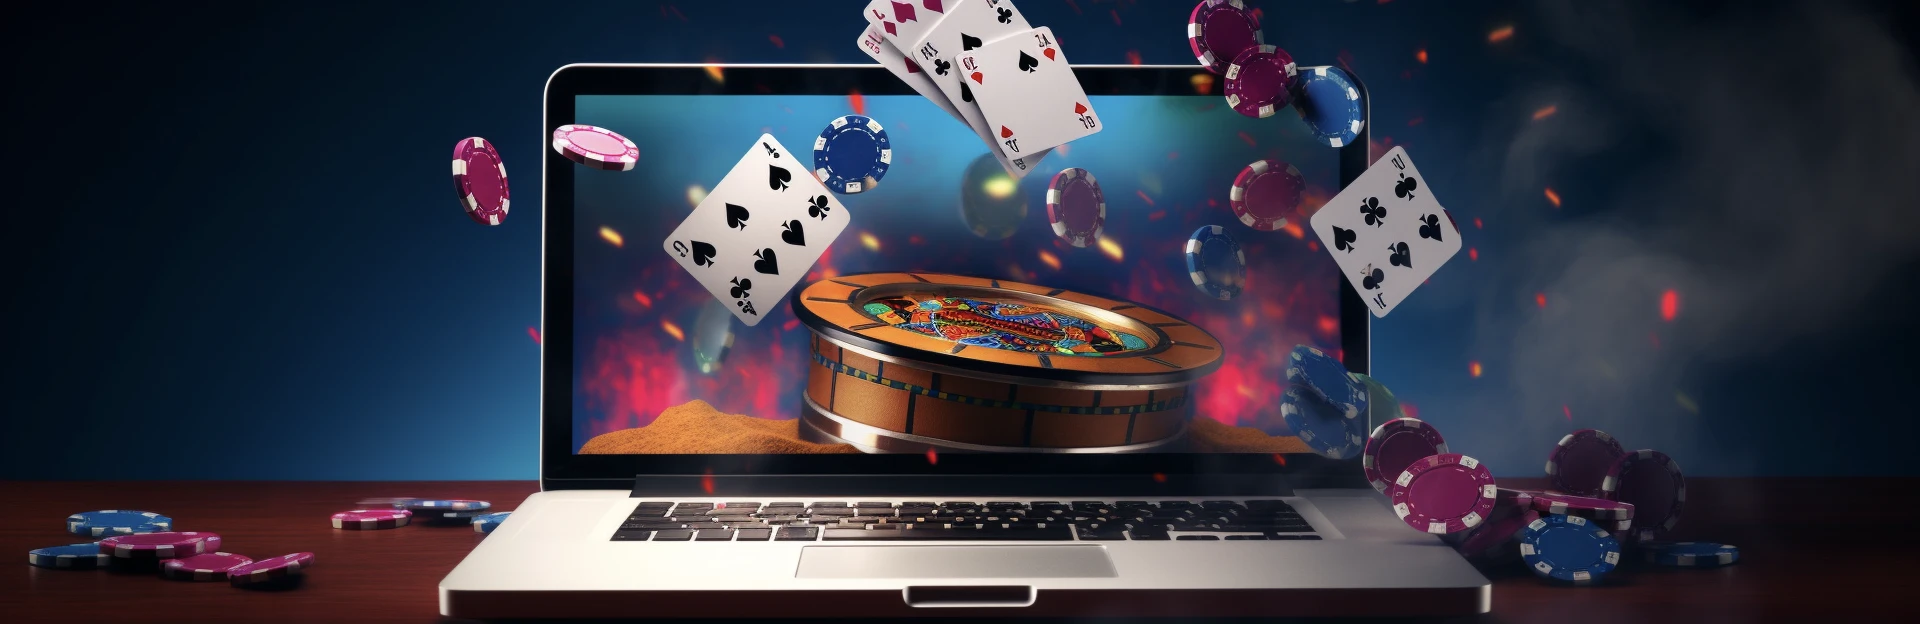 Louisiana online casinos